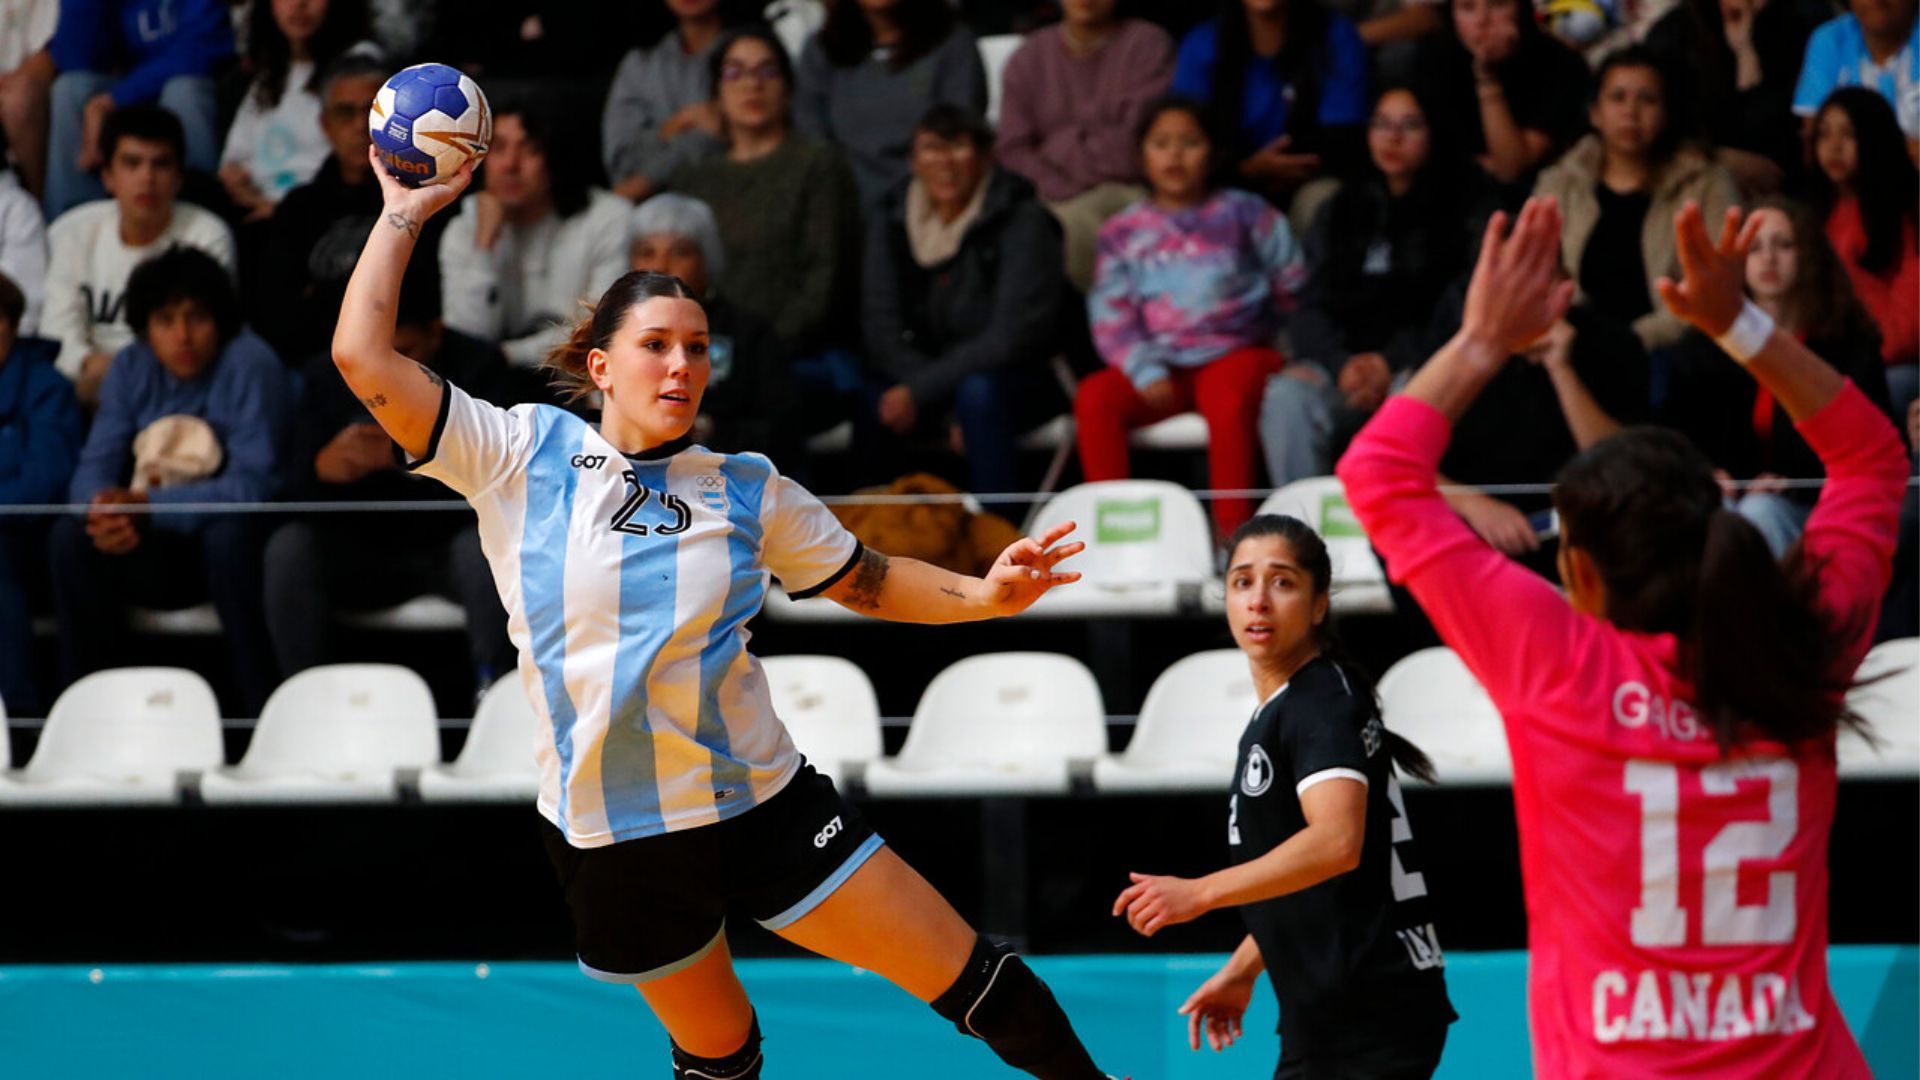 Argentina advances undefeated to female handball's semi-finals